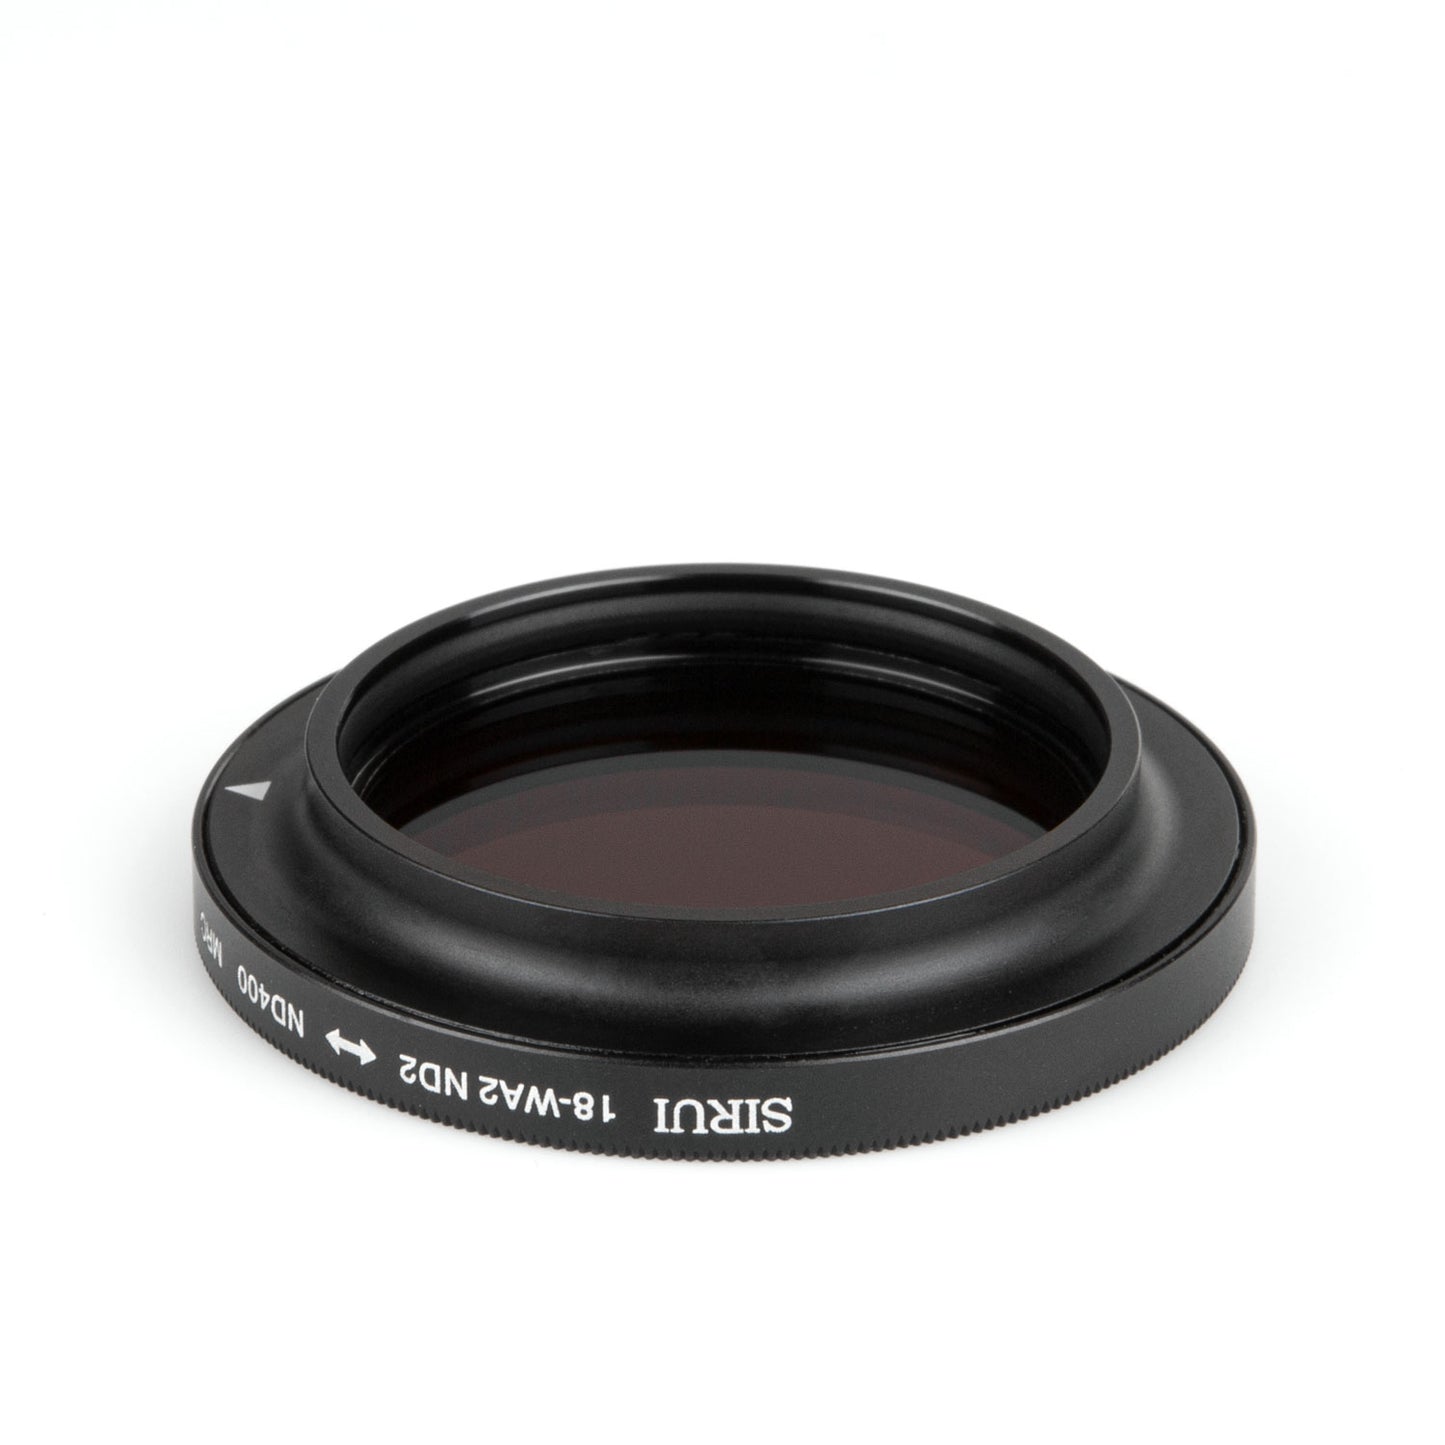 SIRUI 18-WA2-NDX variable grey filter for 18-WA2 and VD-01 SIRUI mobile phone lenses